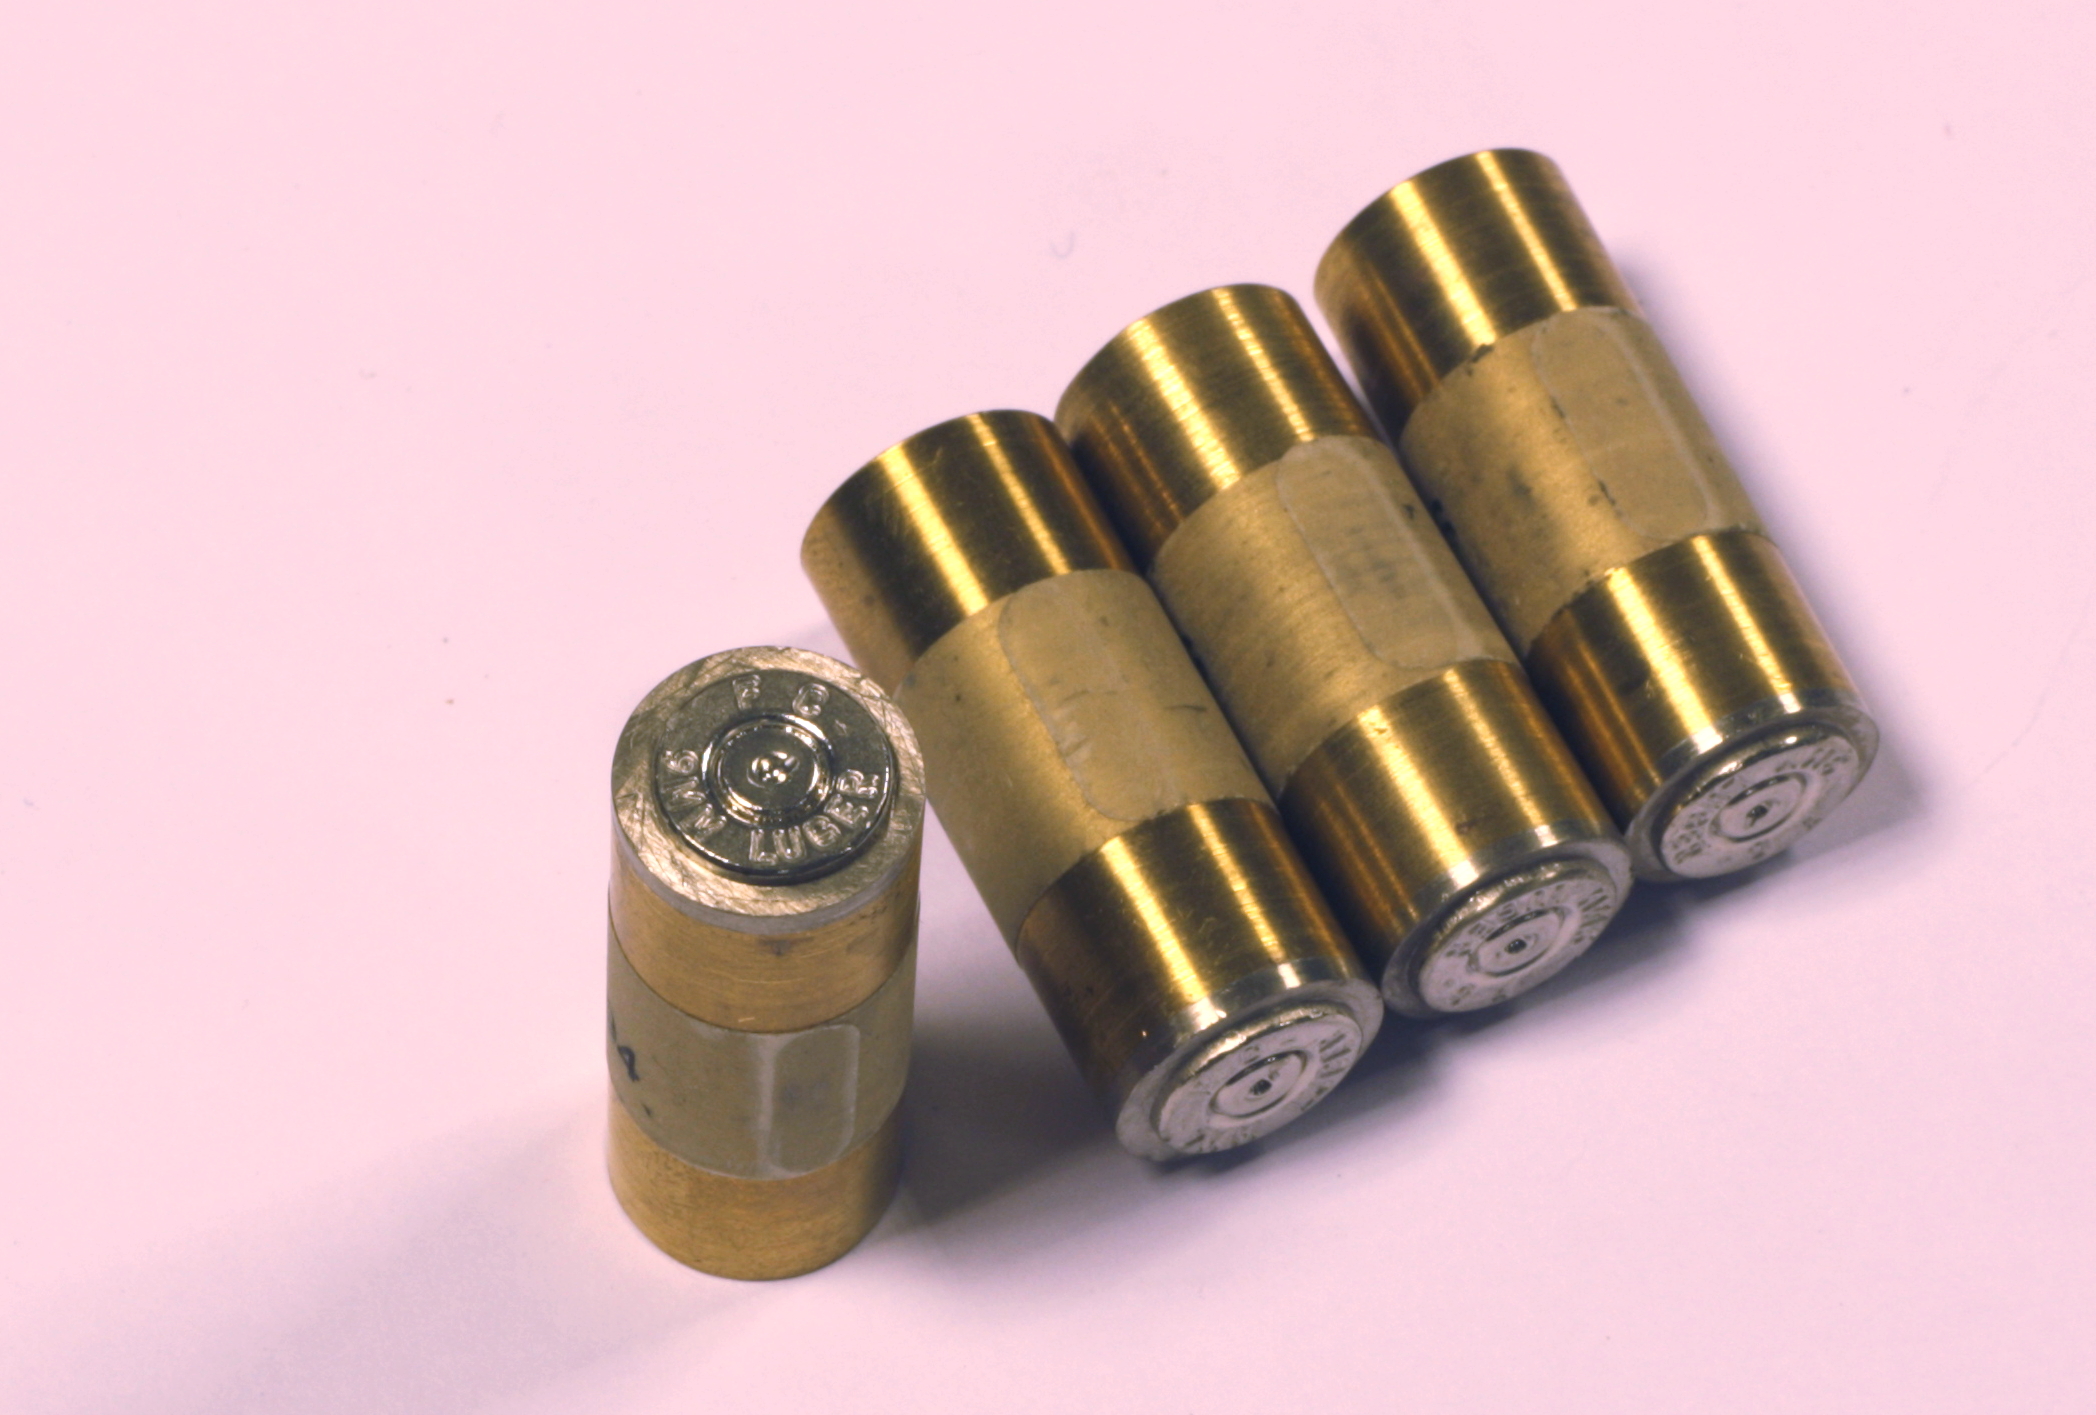 bullet casings for forensic examiners - Rubert & Co Ltd